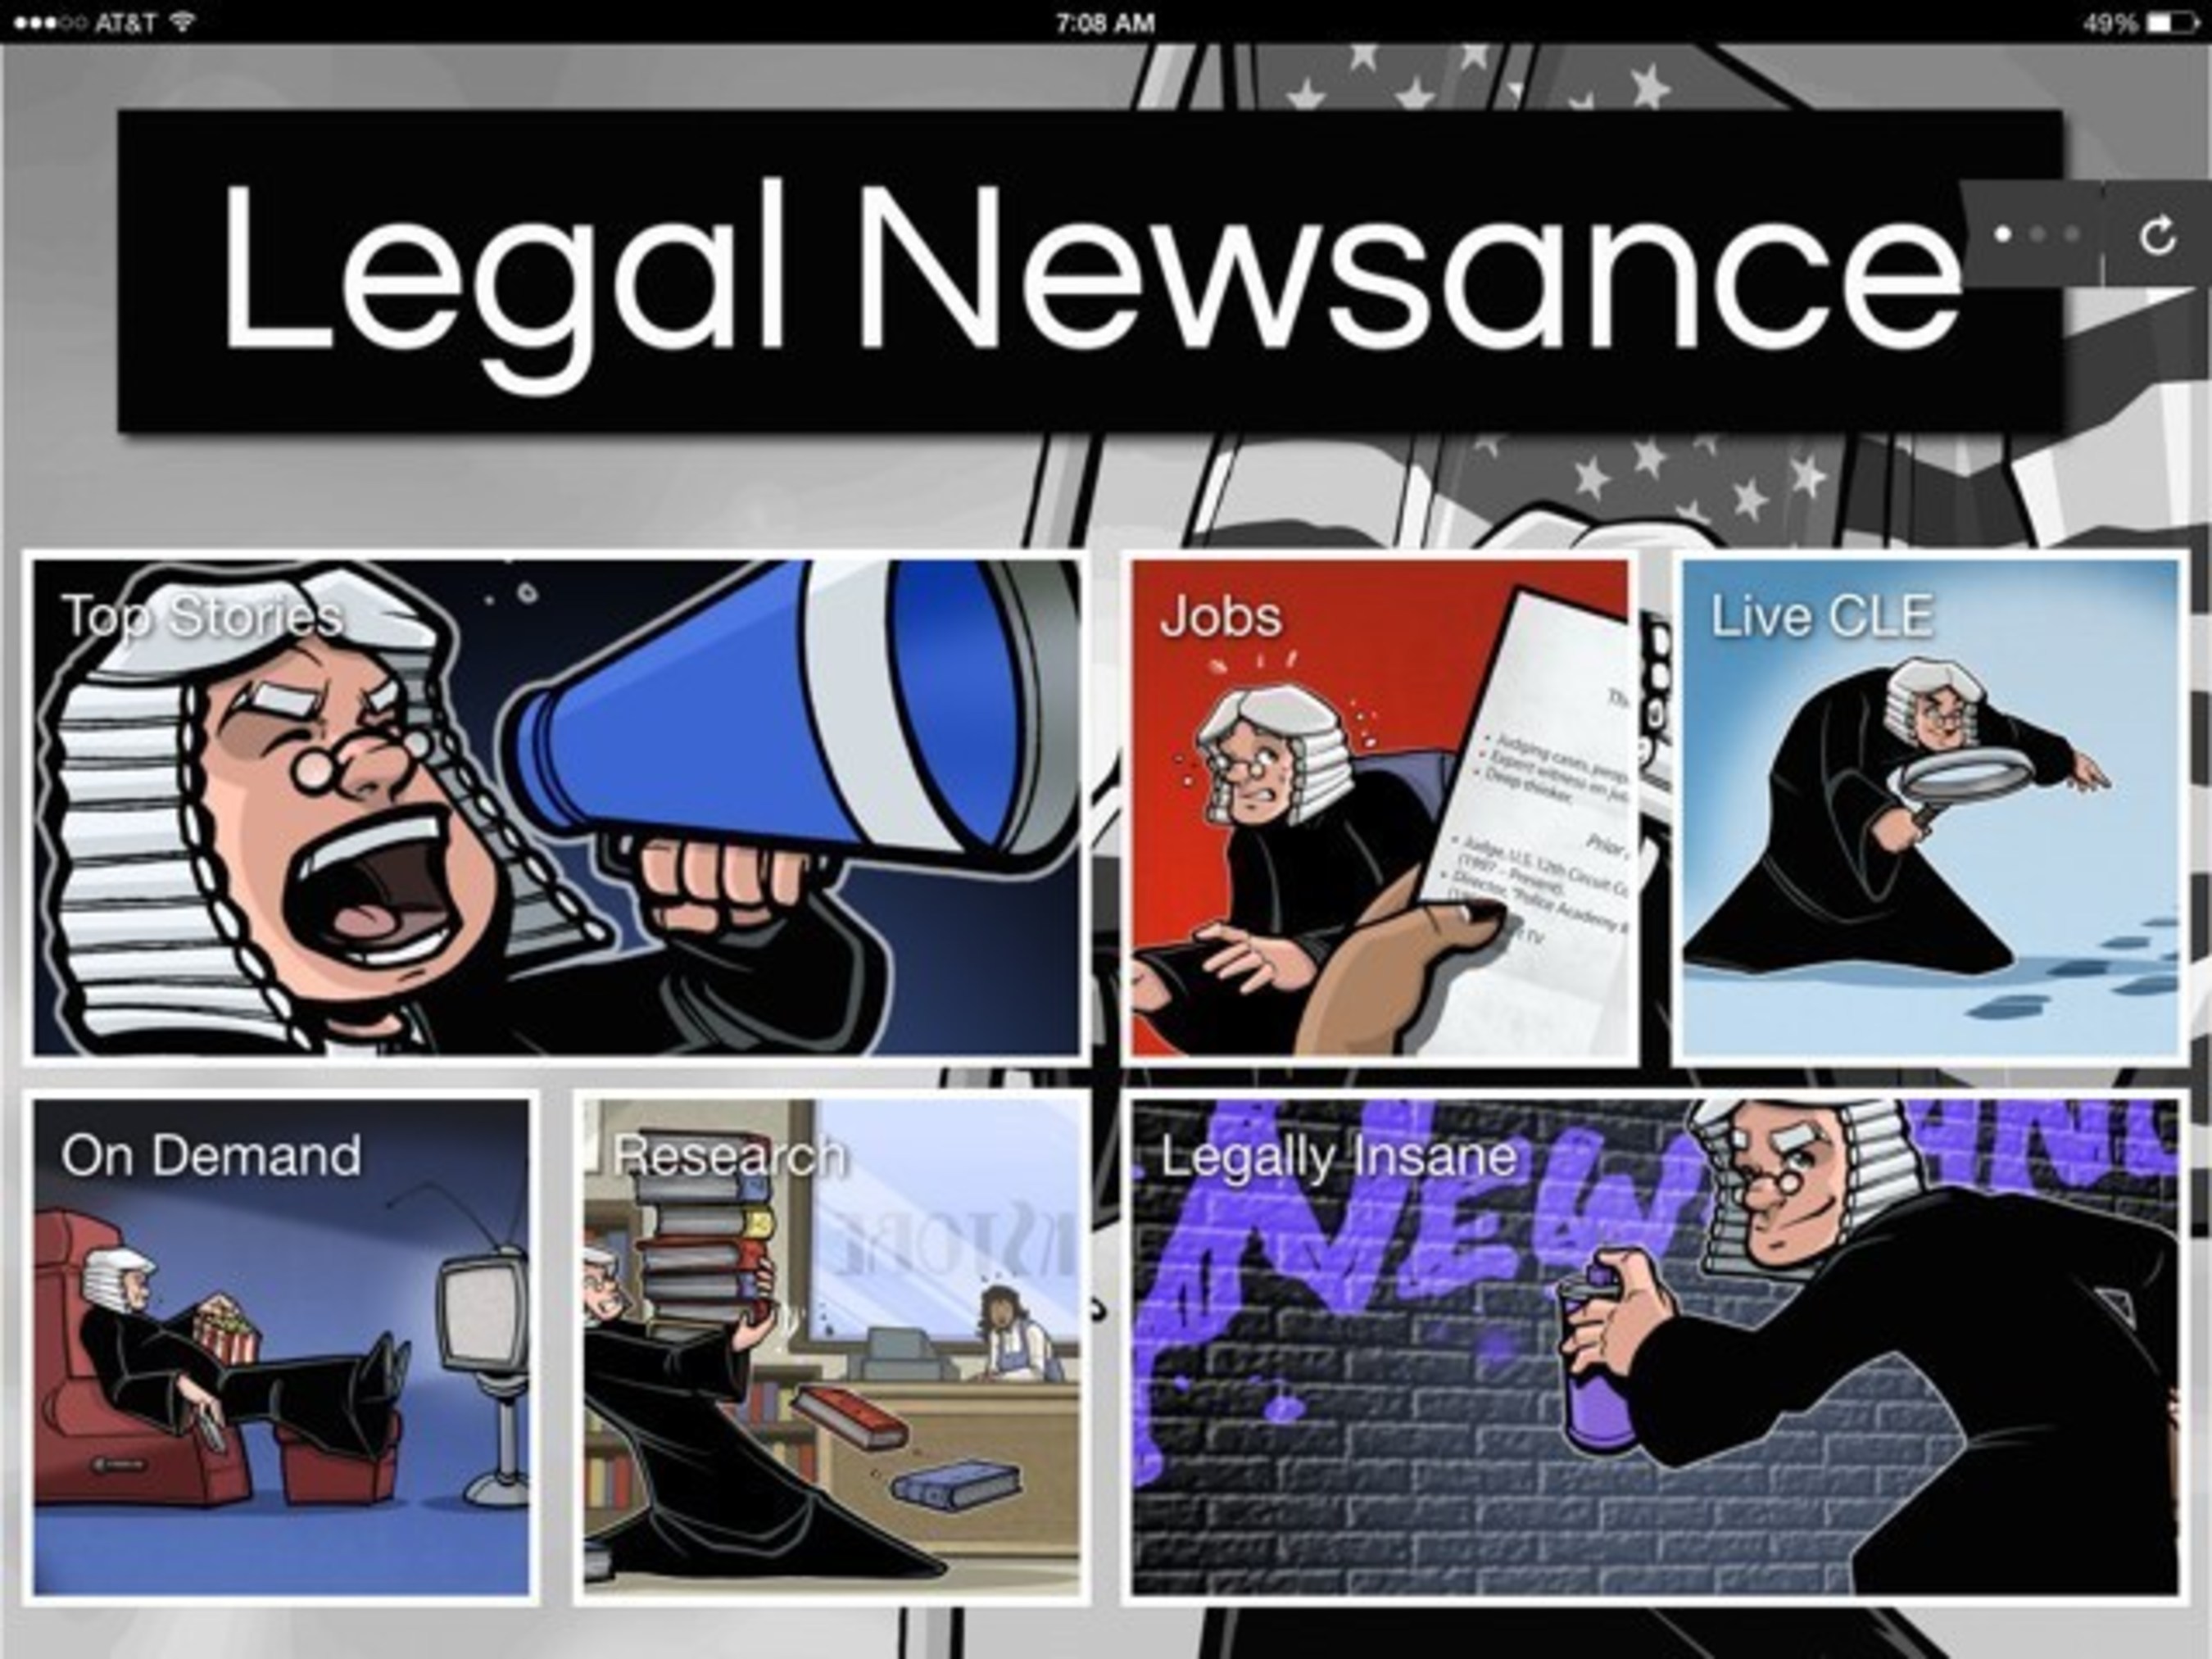 Legal Newsance - iPad home screen